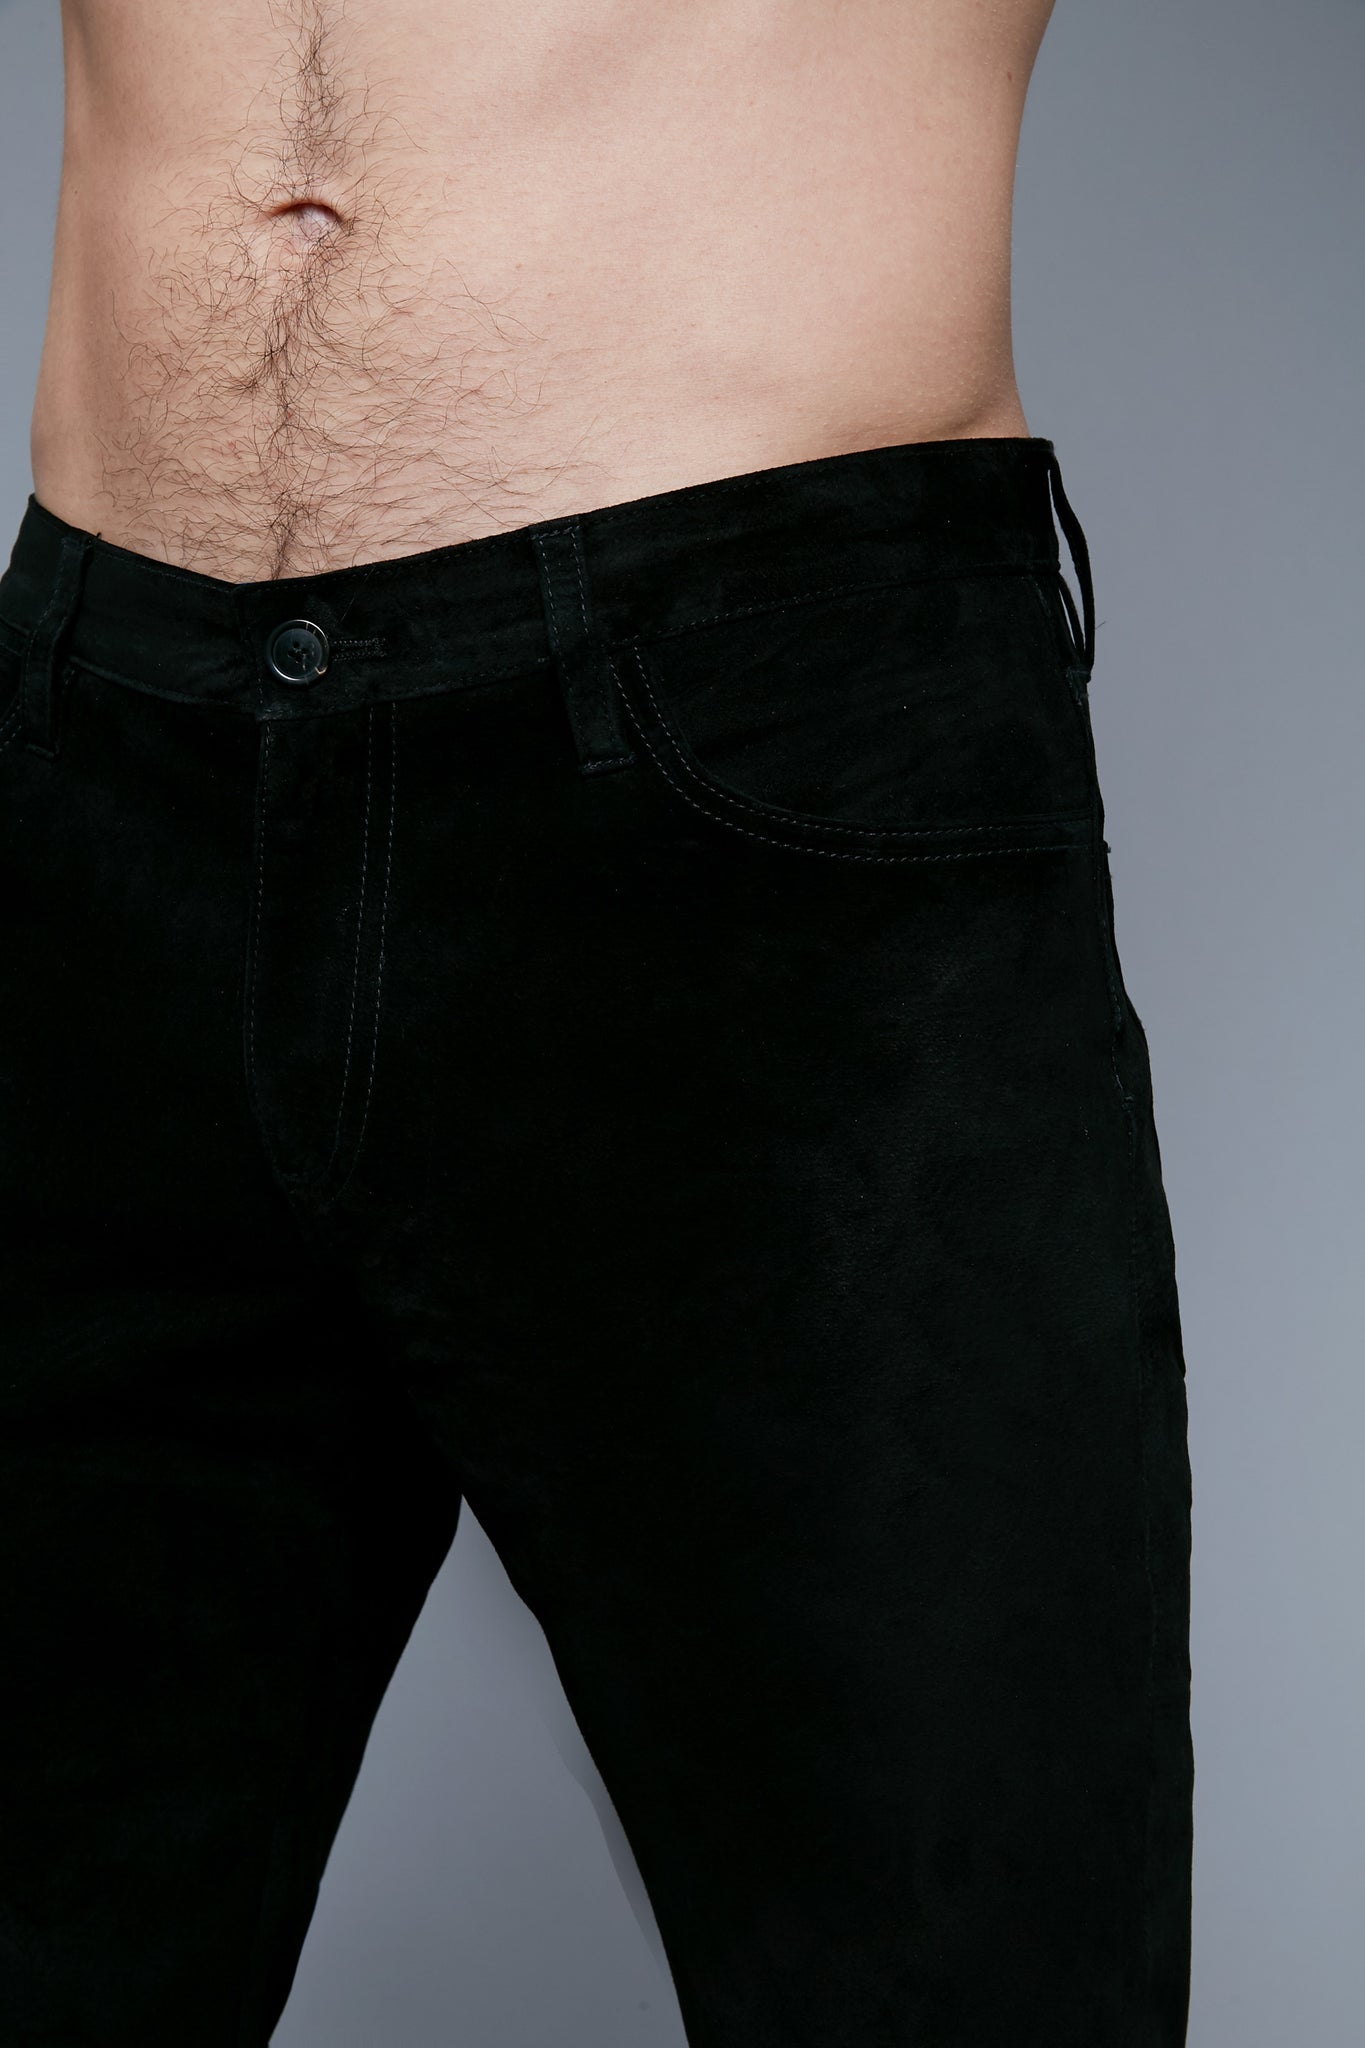 Mood View: Model Hans Weiner wearing Suede 5 Pocket Pants